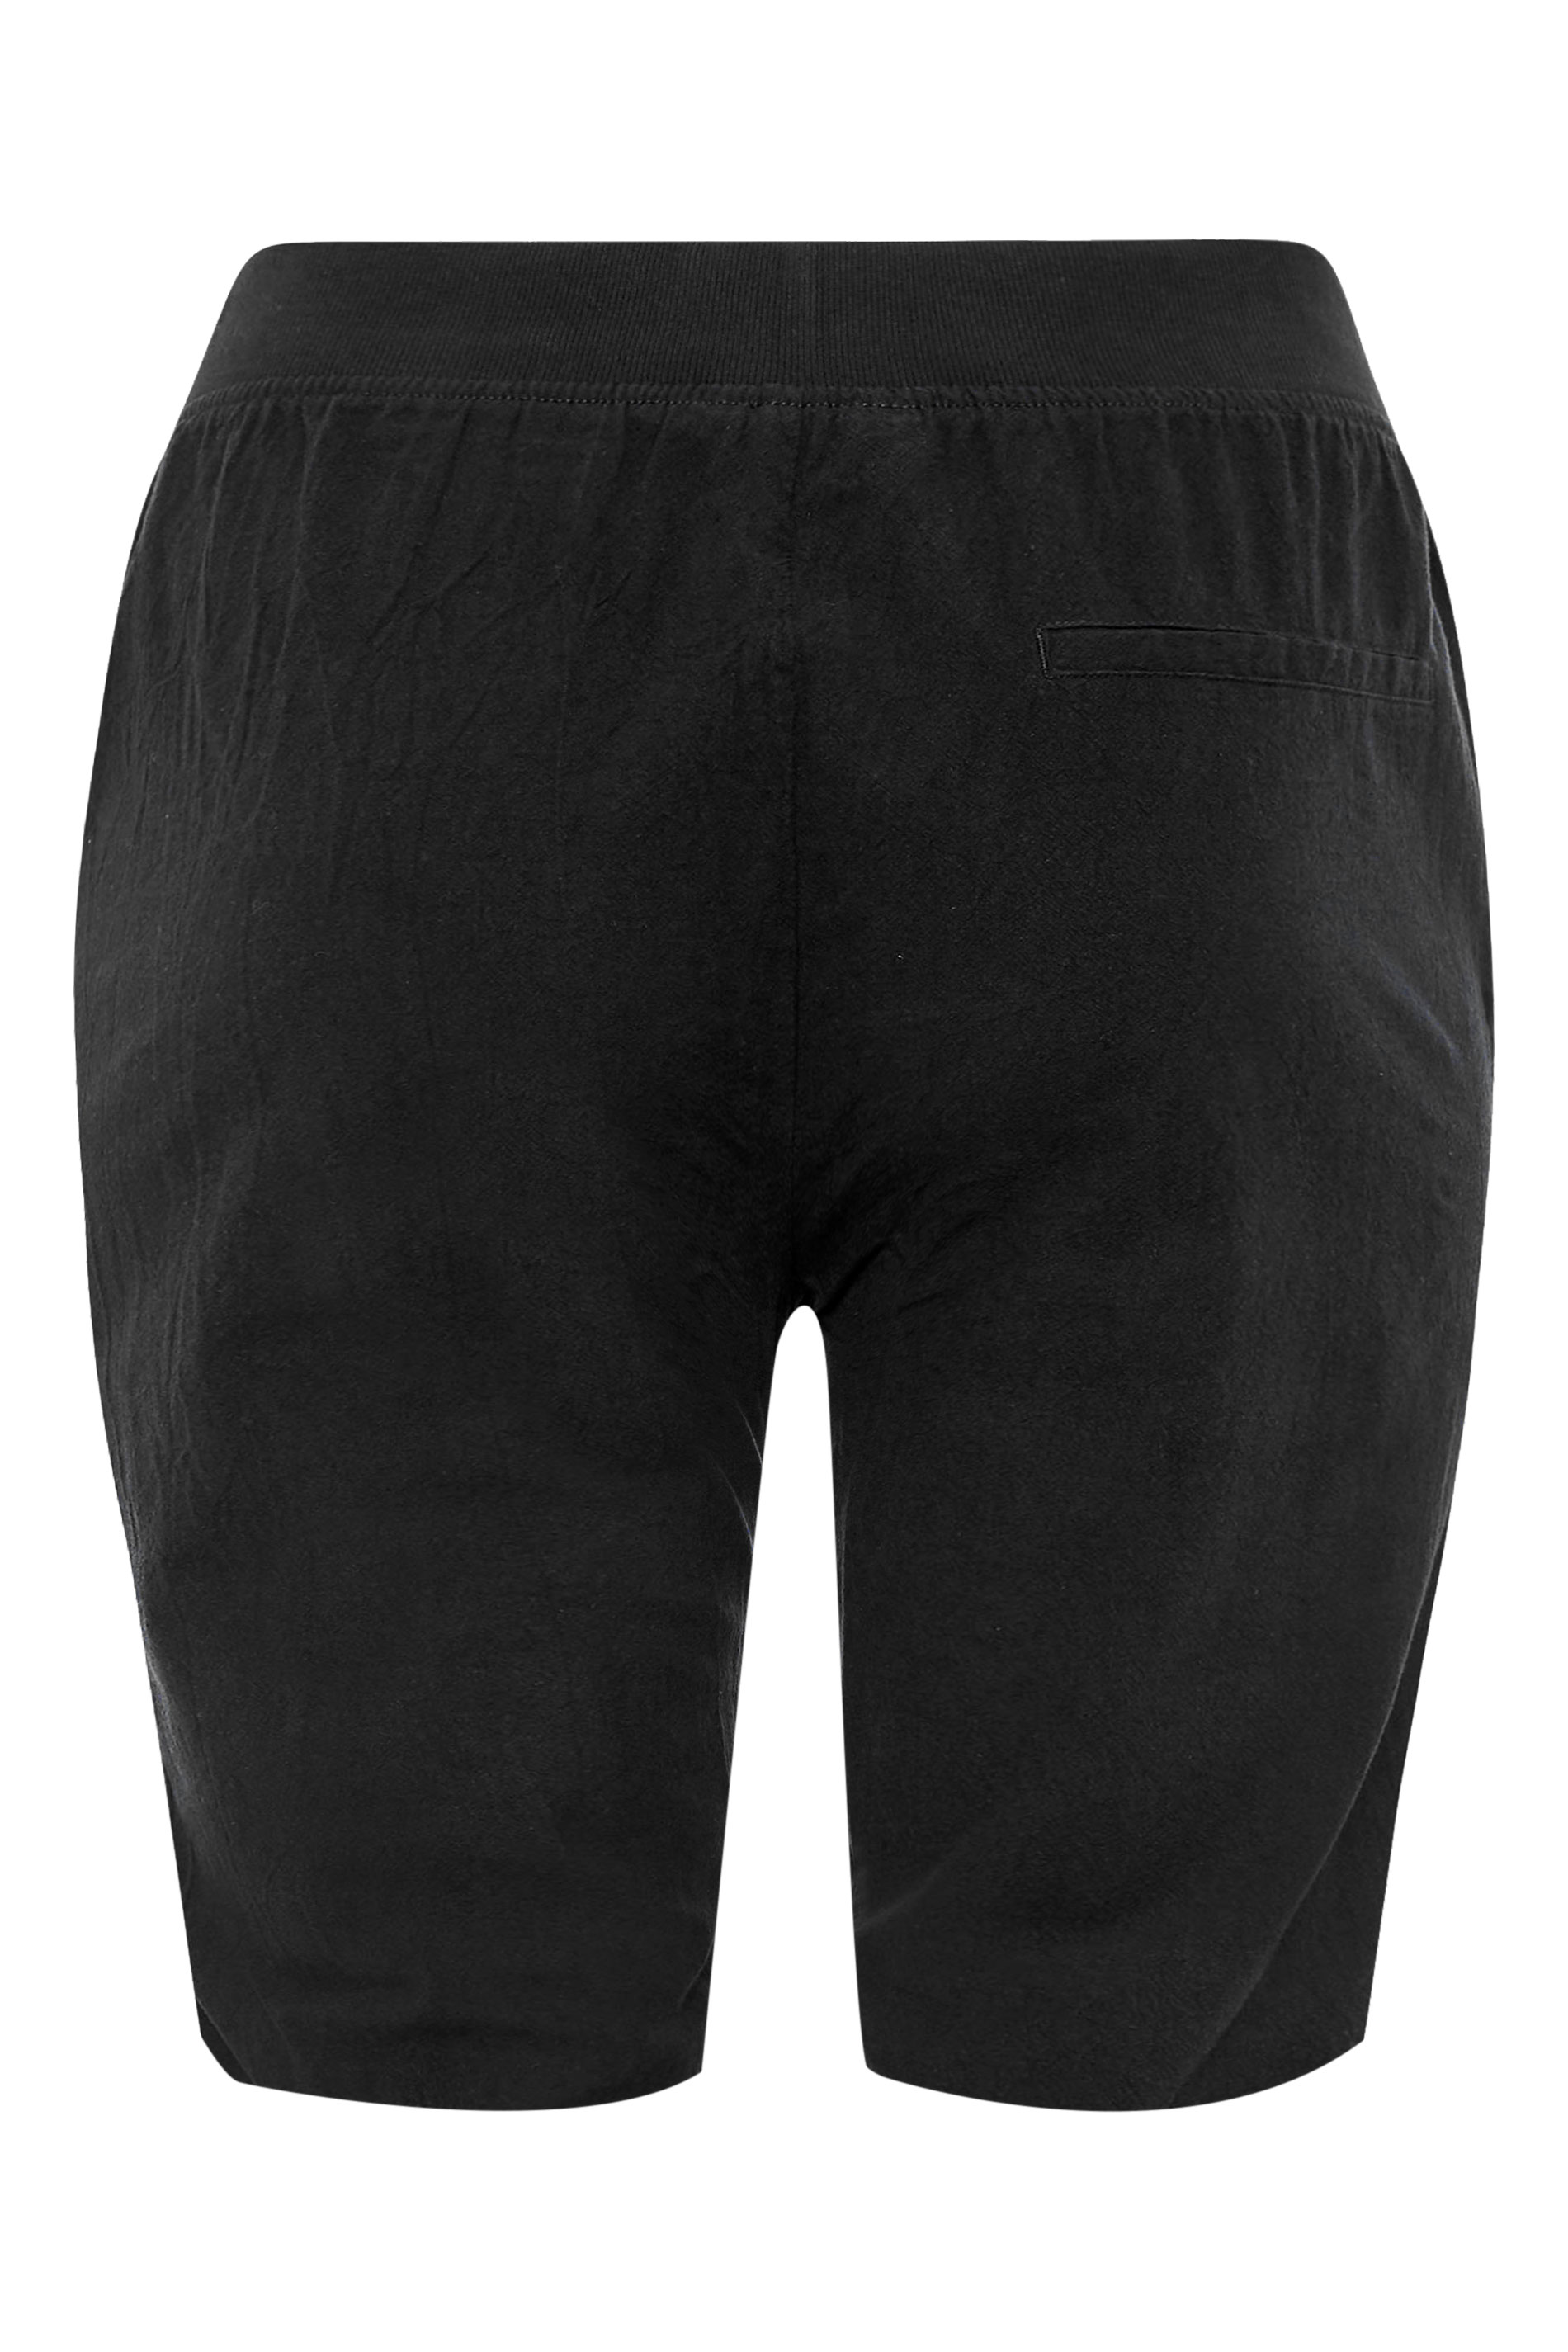 Grande taille  Shorts Grande Taille Grande taille  Shorts en Coton | Short Noir en Coton - UJ50772